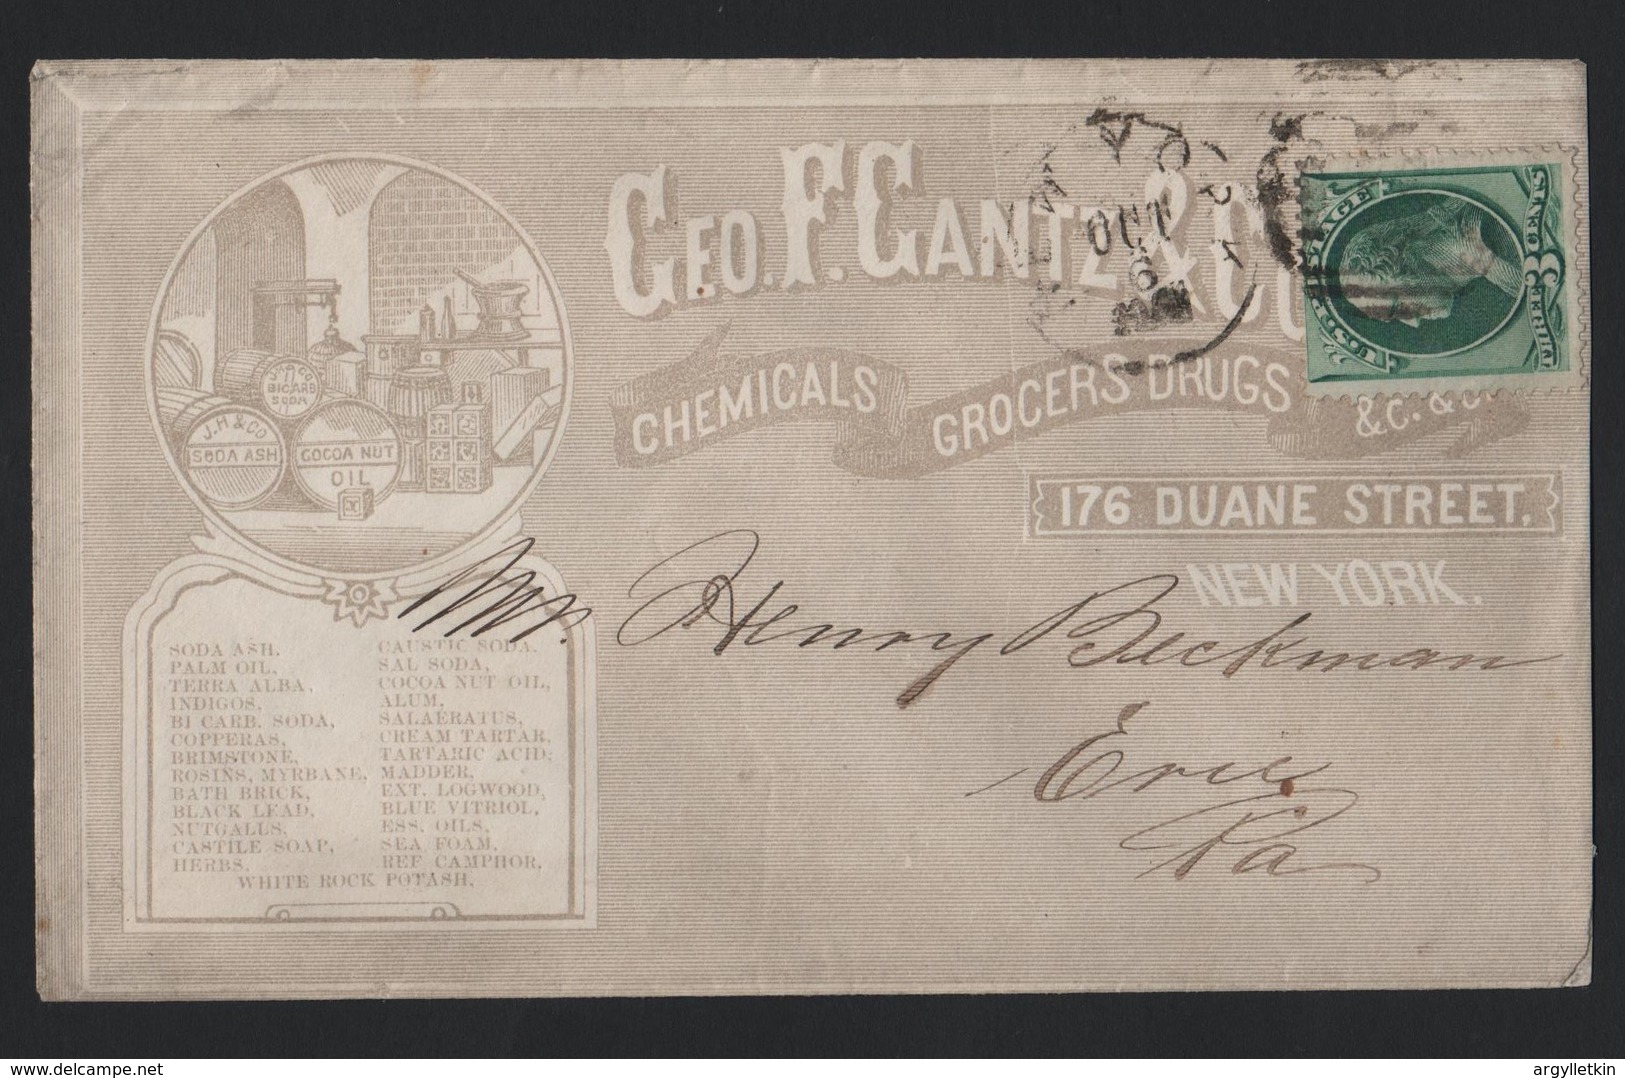 U.S.A. ADVERTISING NEW YORK GEO GANTZ CHEMICALS SODA SOAP COCONUT OIL 1870 - Recordatorios